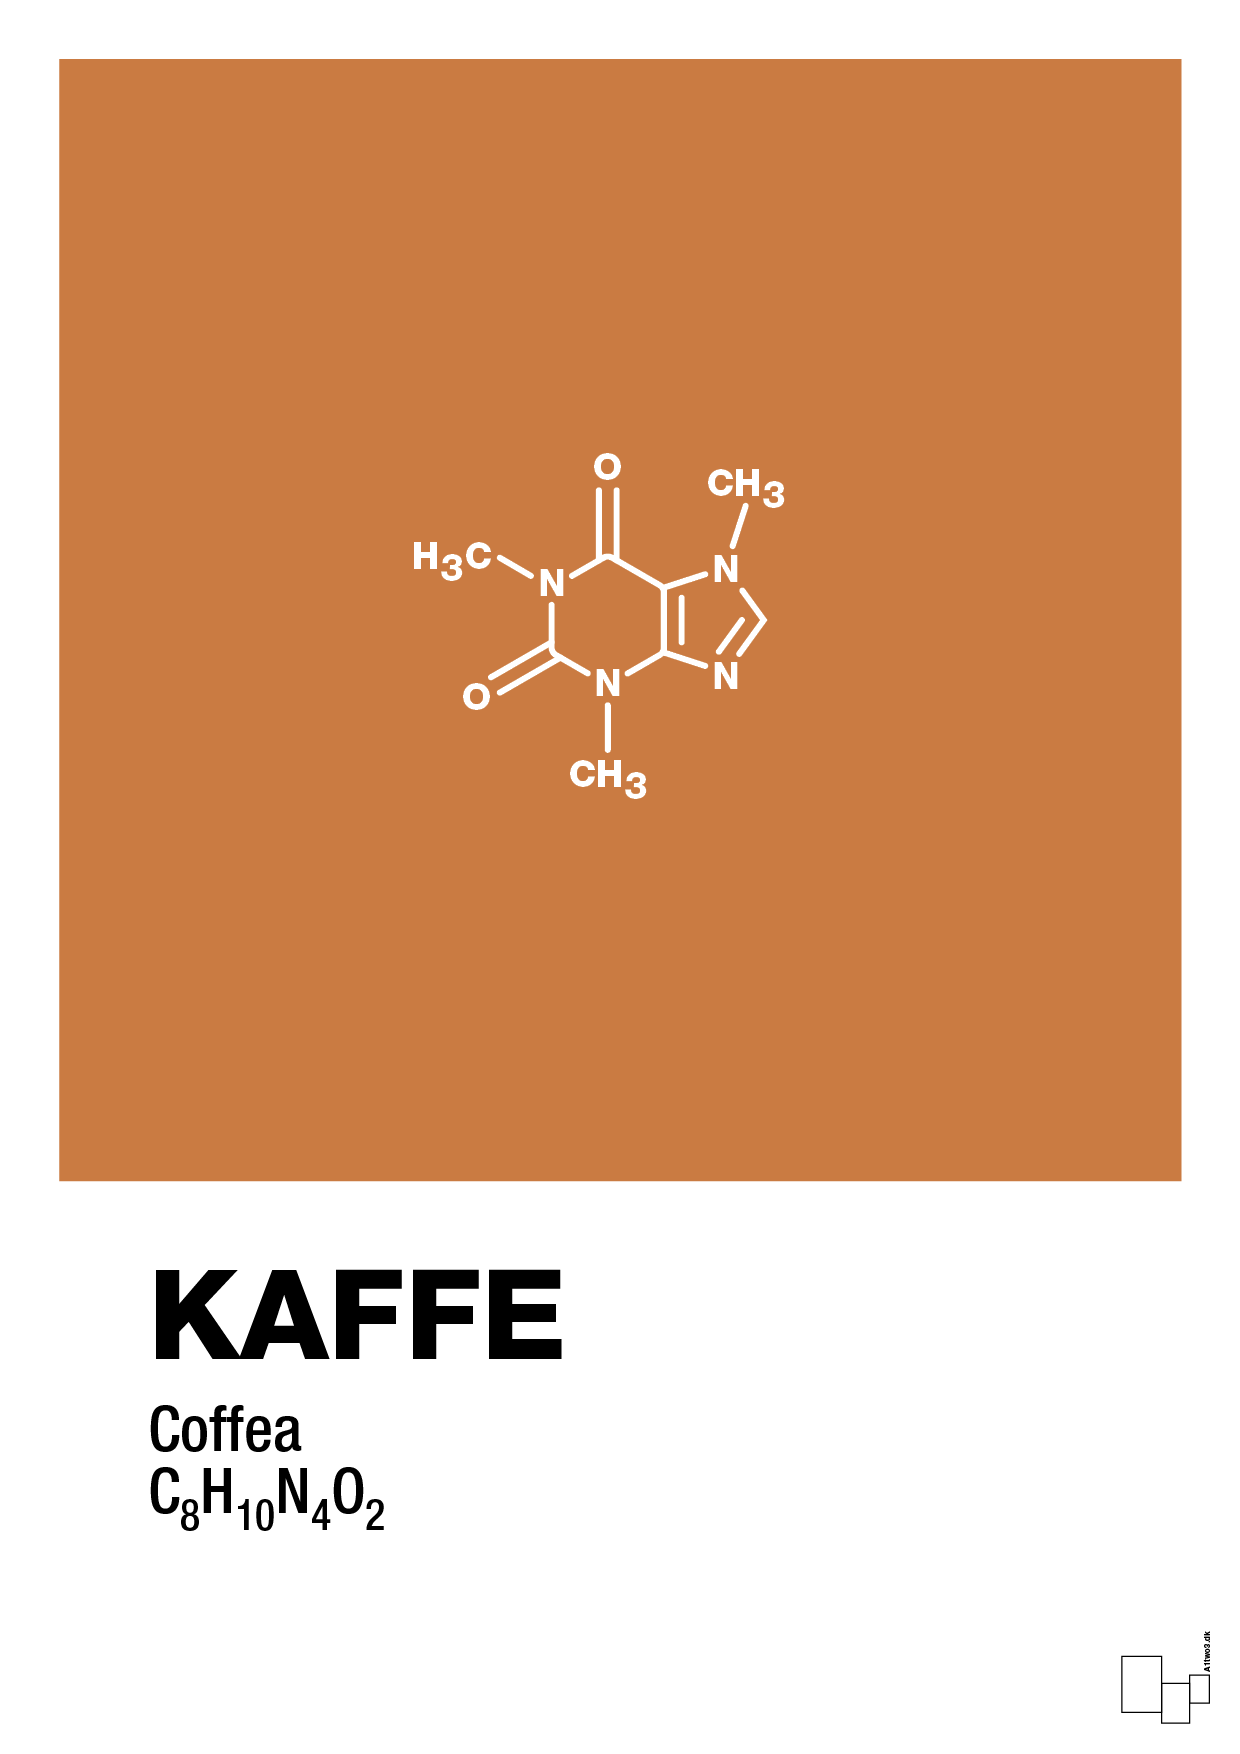 kaffe - Plakat med Videnskab i Rumba Orange